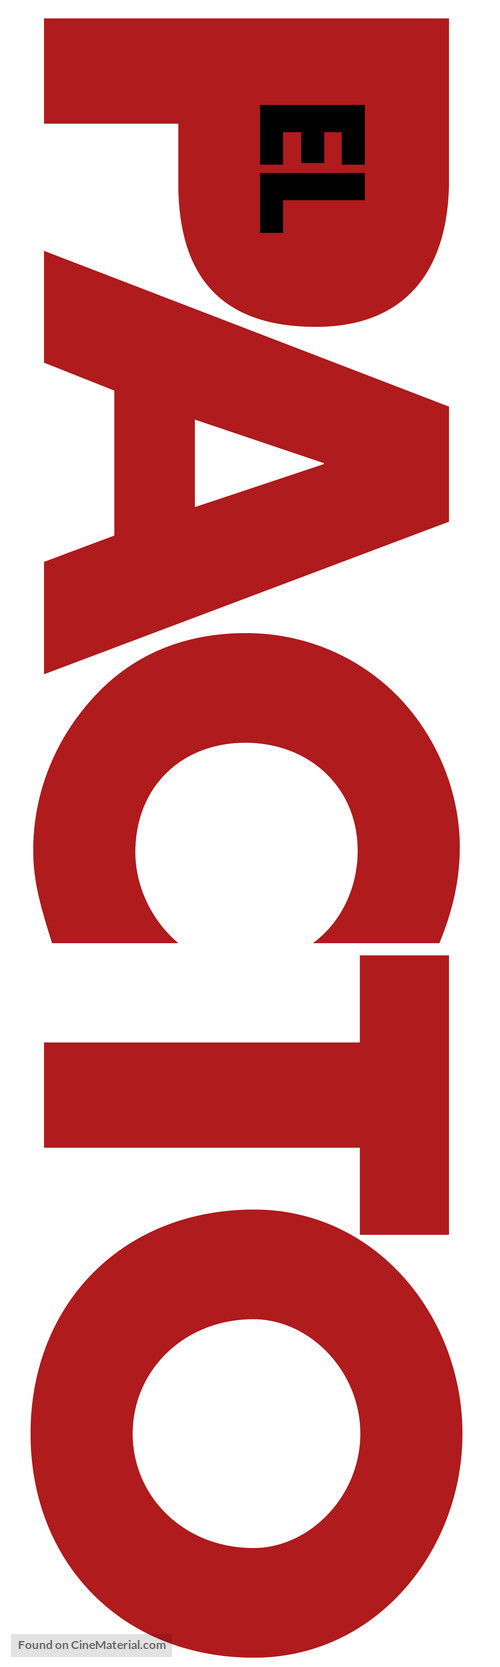 Seeking Justice - Spanish Logo